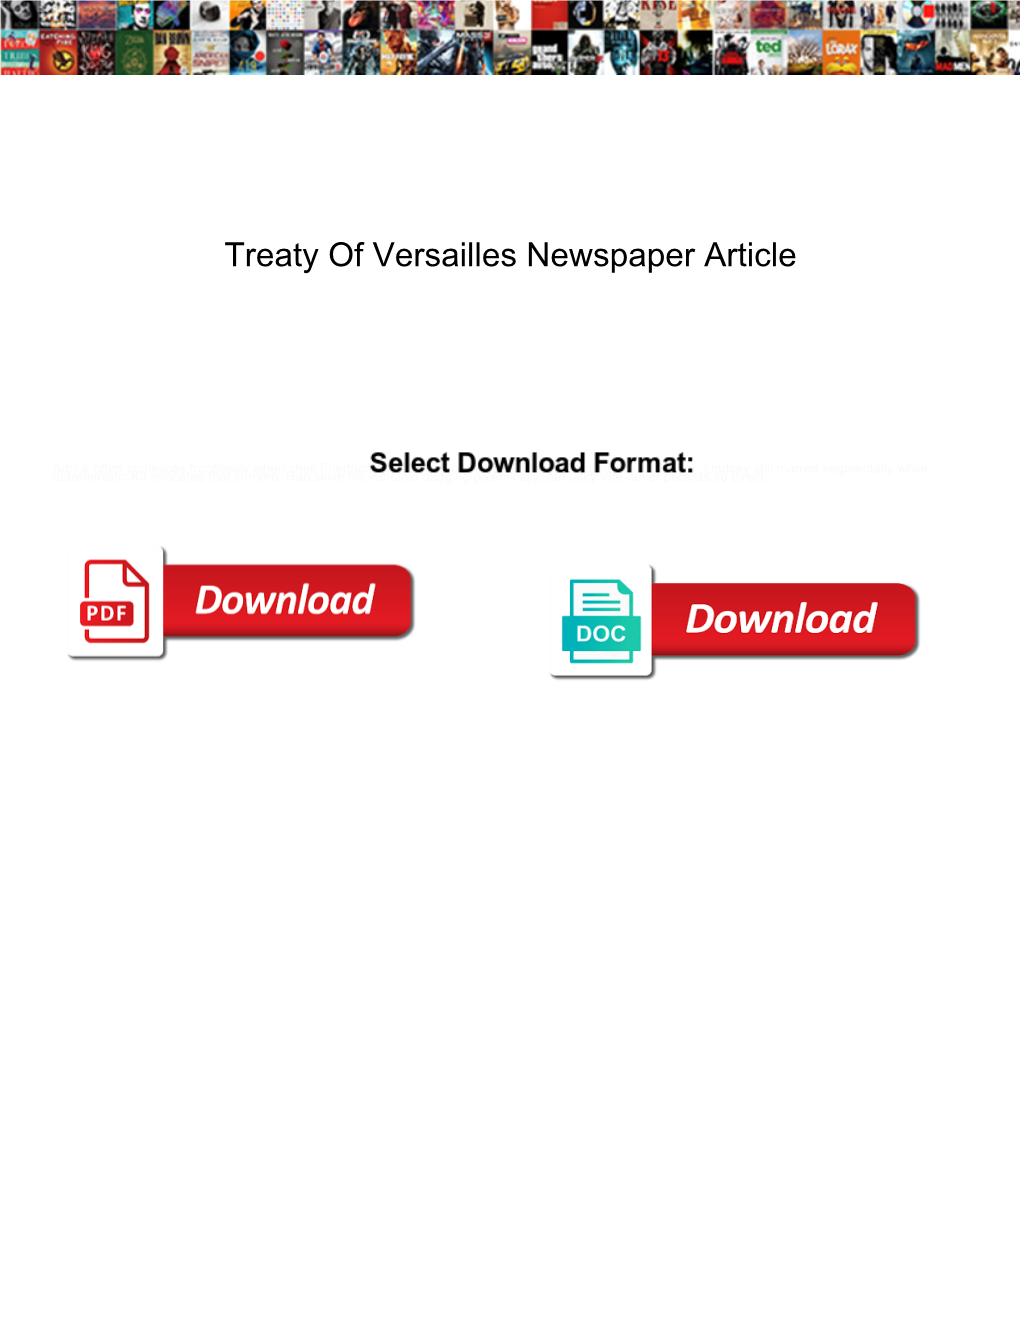 Treaty of Versailles Newspaper Article